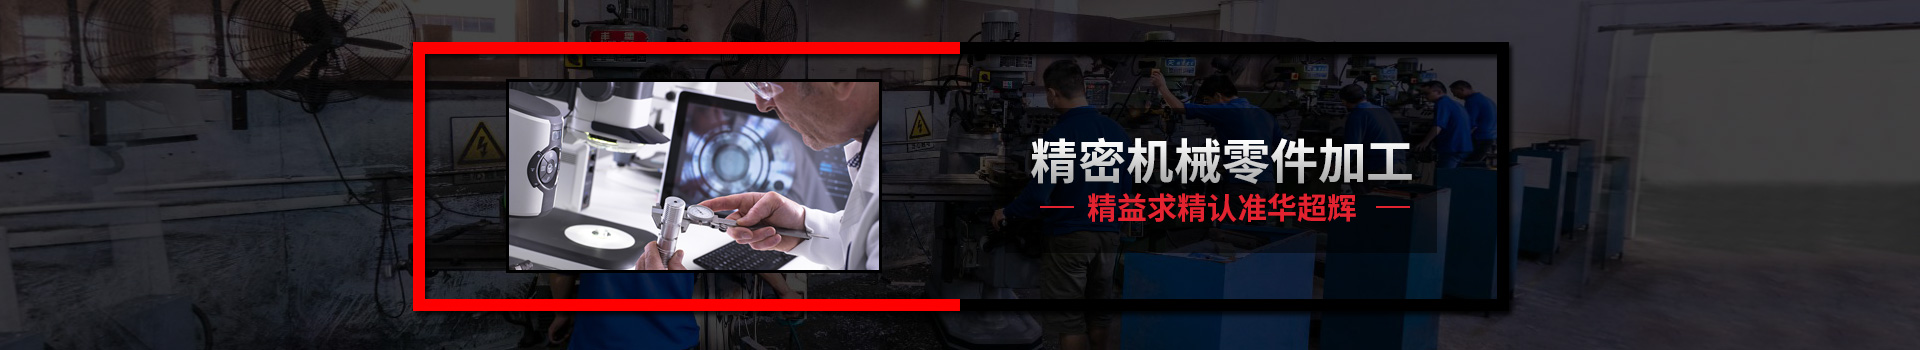 CNC精密机械加工,金沙0555jscom